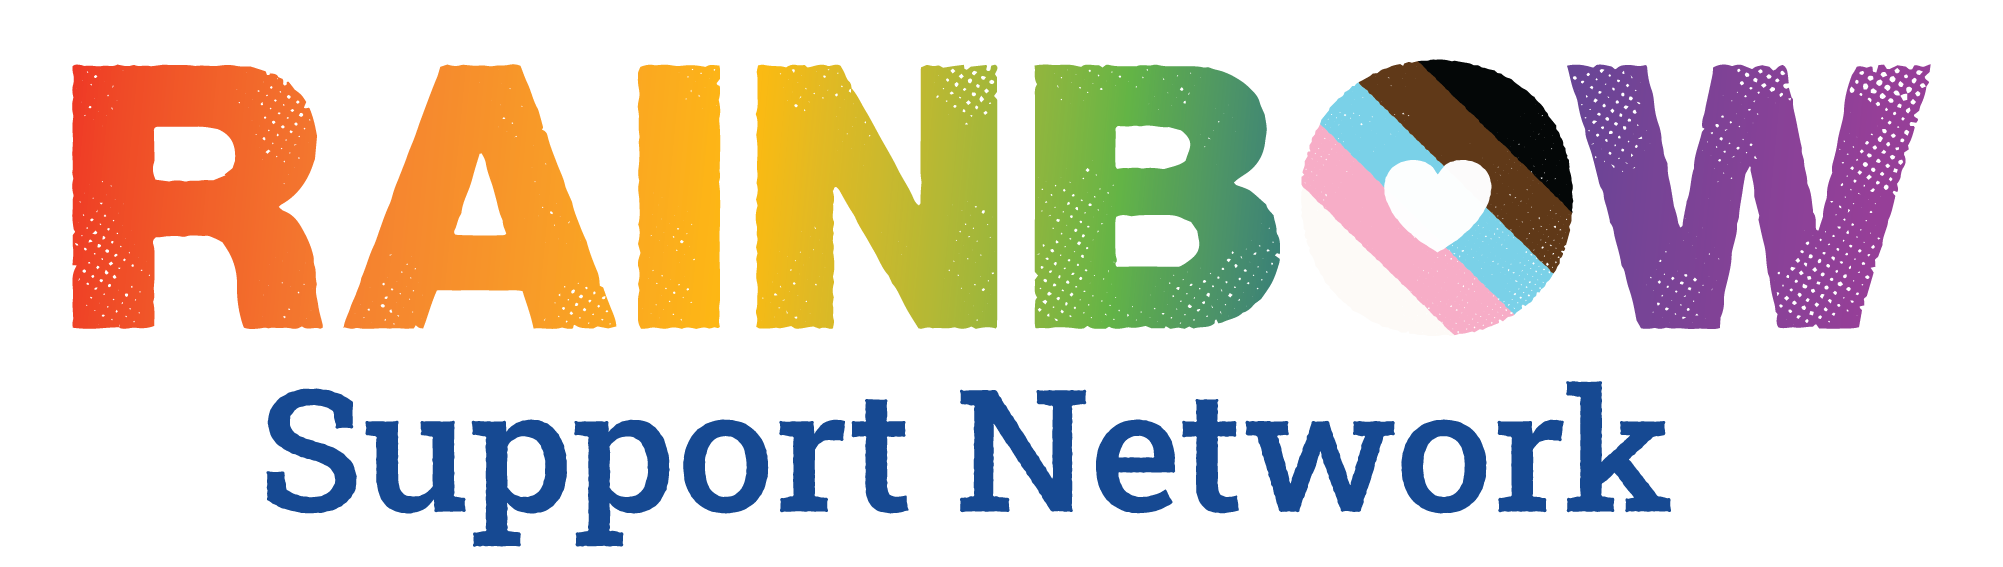 Rainbow Support Network logo